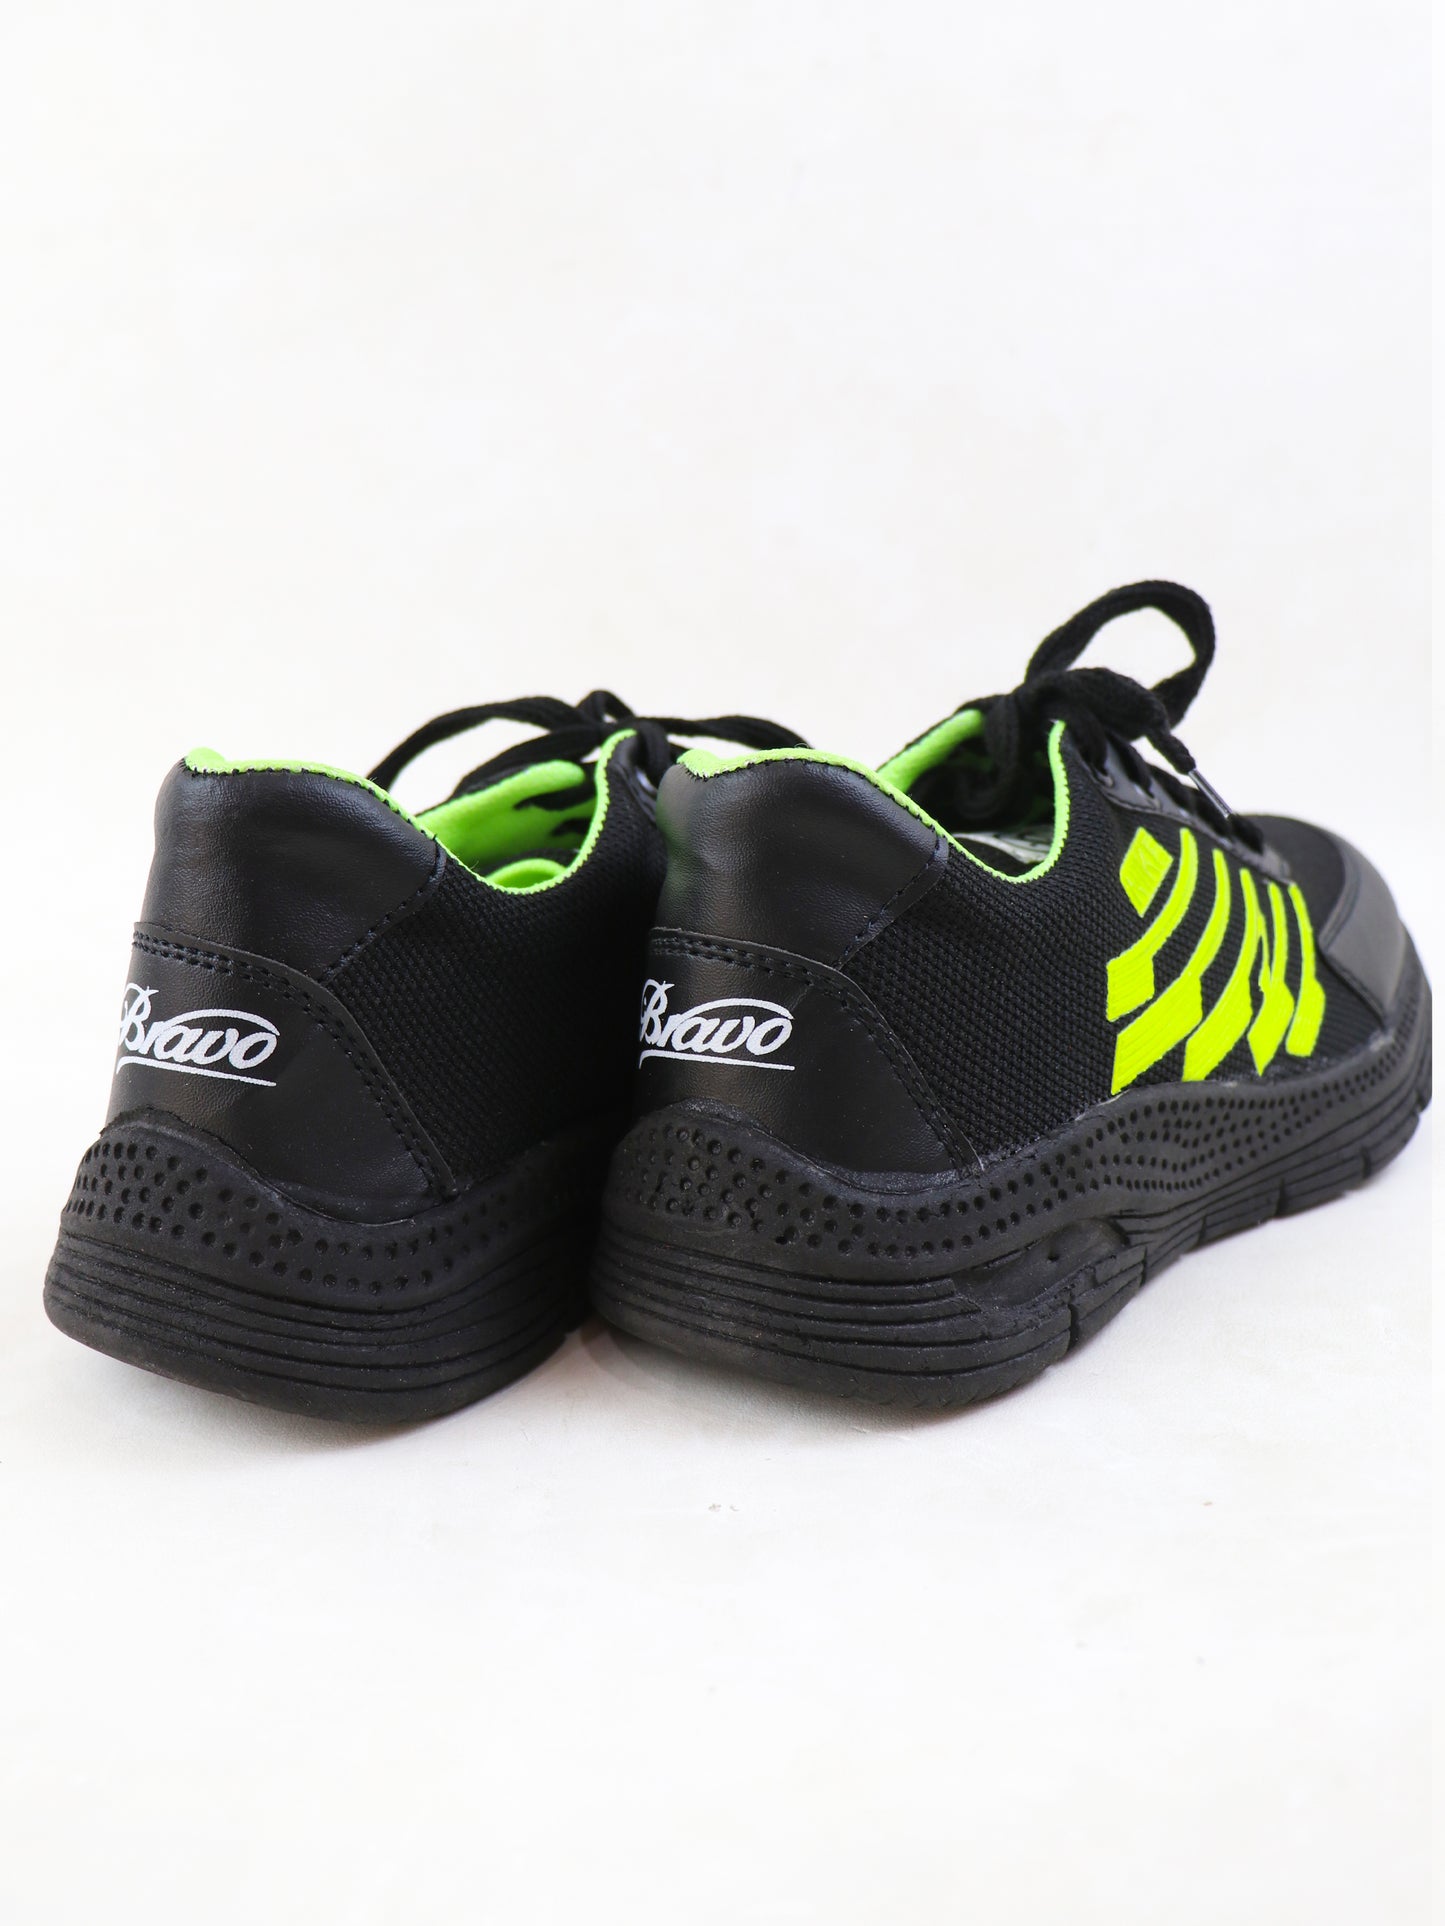 MJS46 Sneakers for Men Black